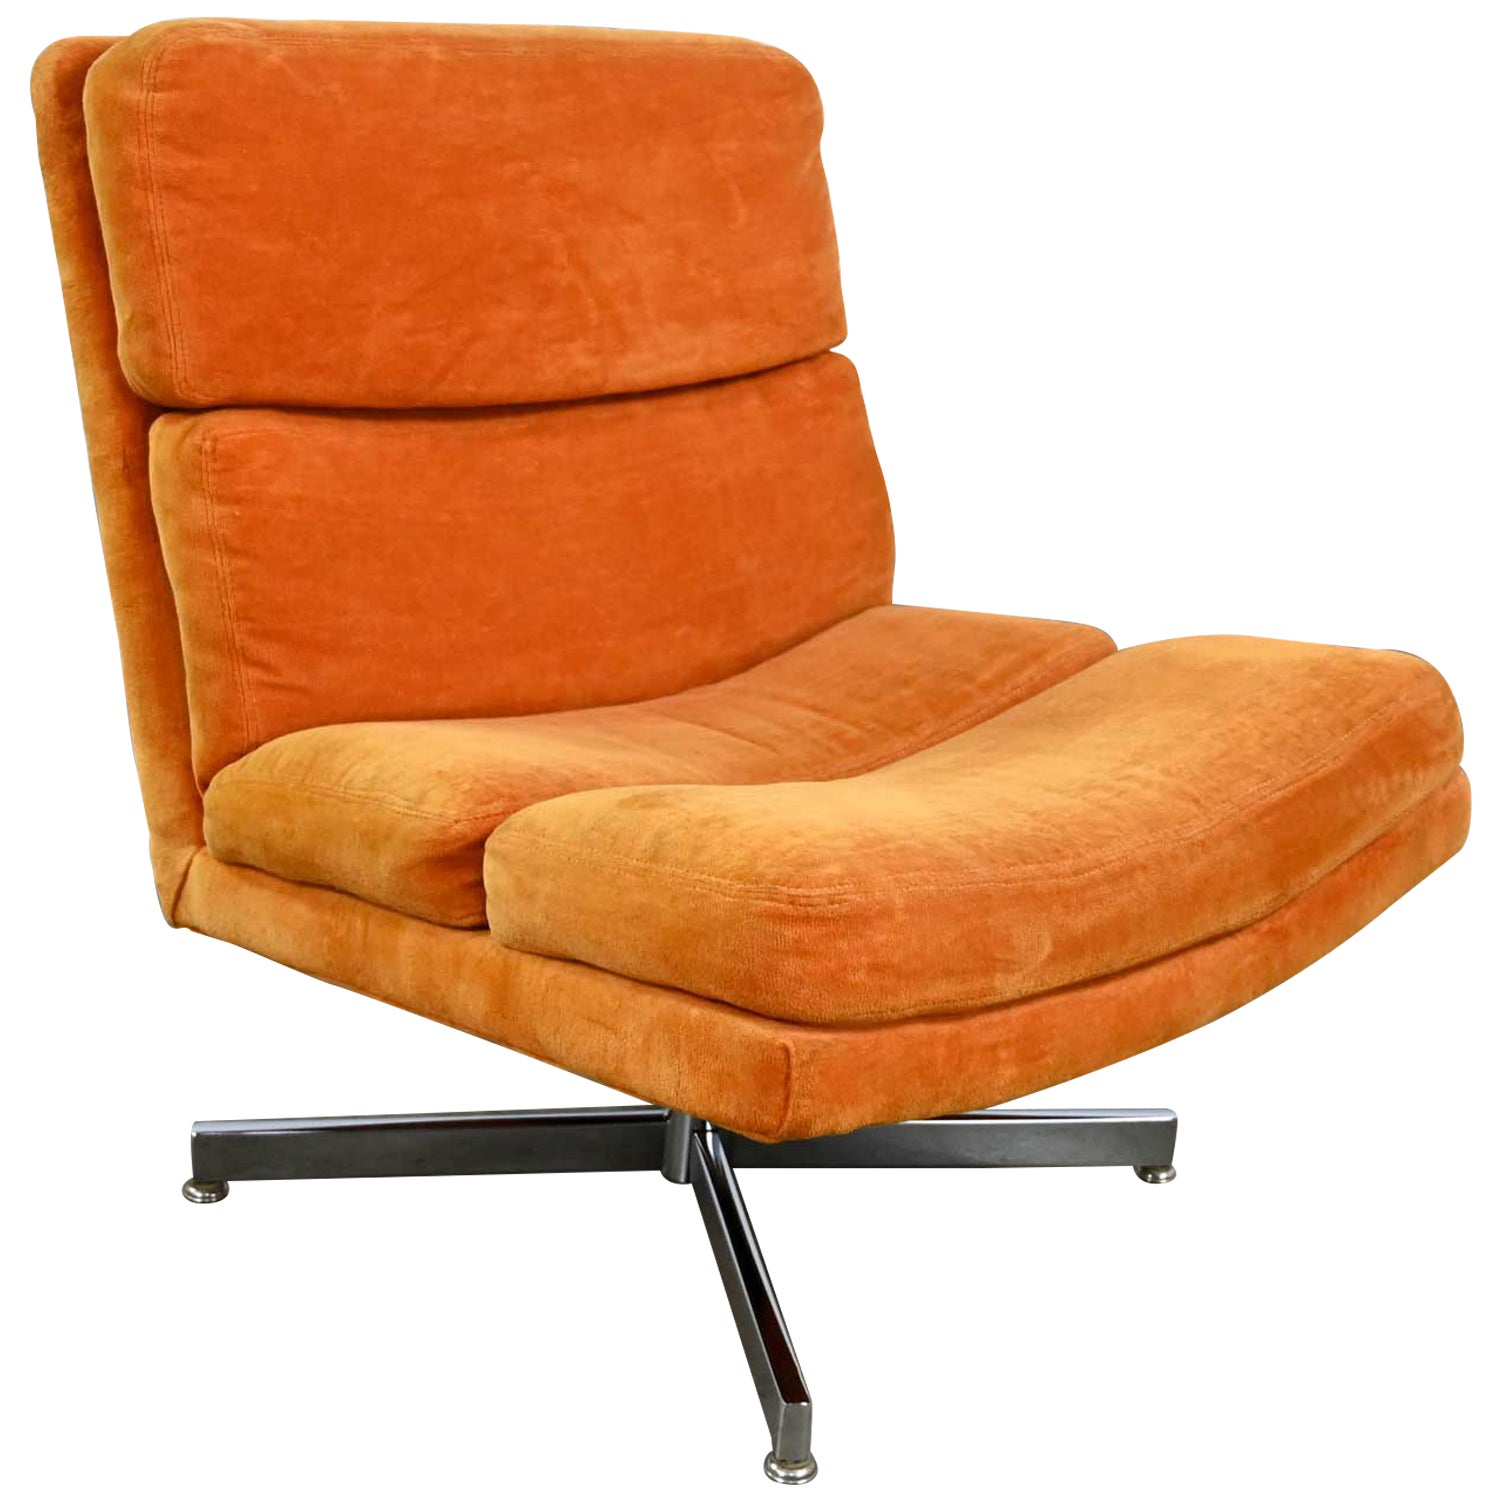 Moderner drehbarer Sessel ohne Armlehne Orange gebürstete Chenille & Chromgestell mit 4 Zacken